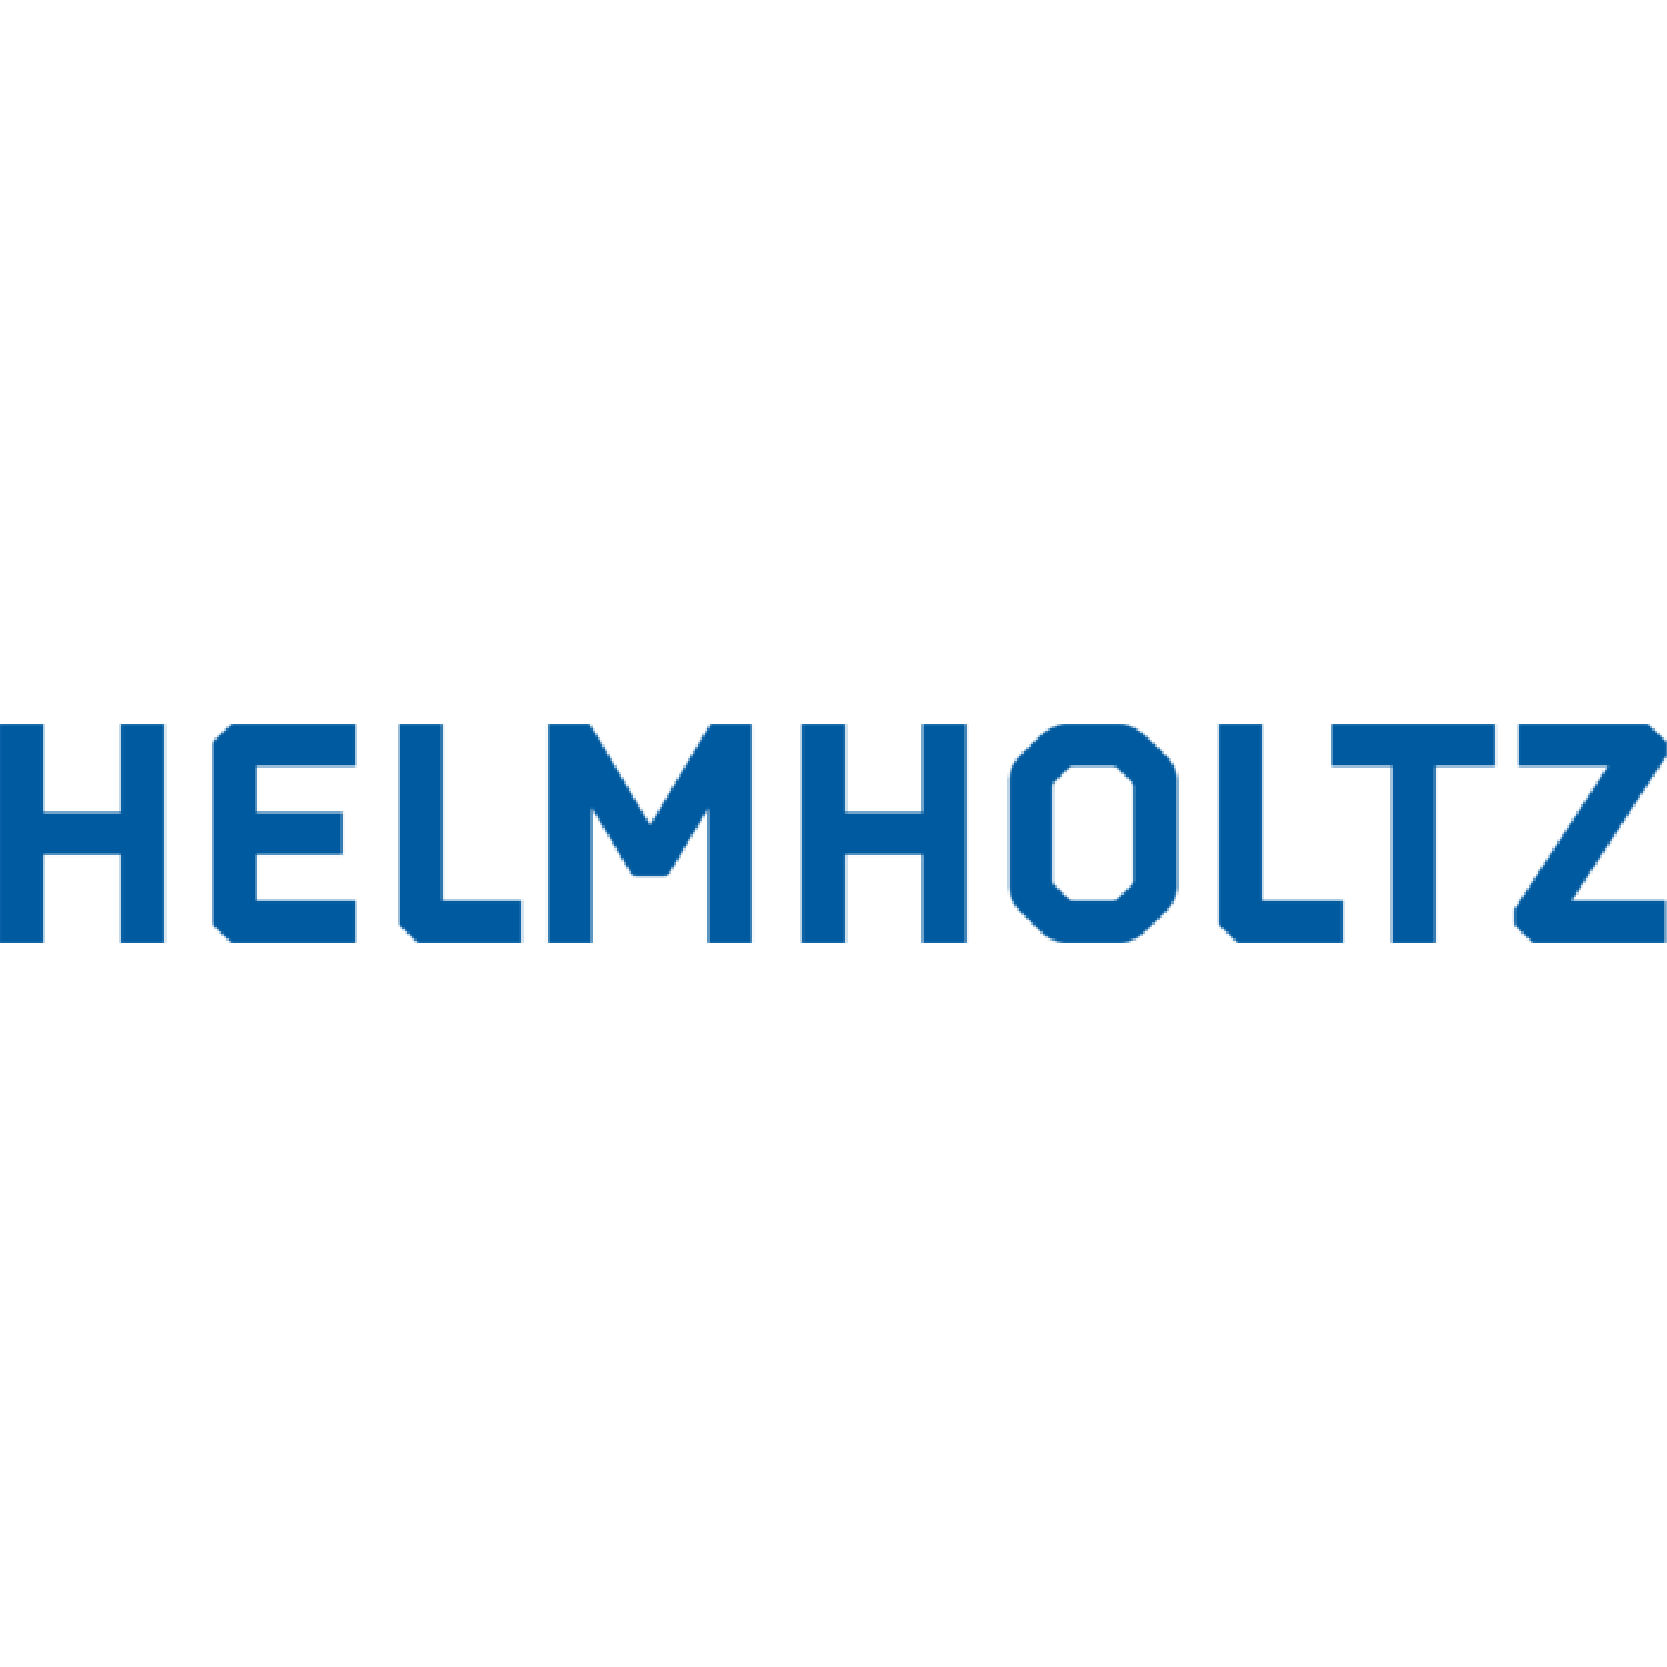 Helmholtz Association of German Research Centres